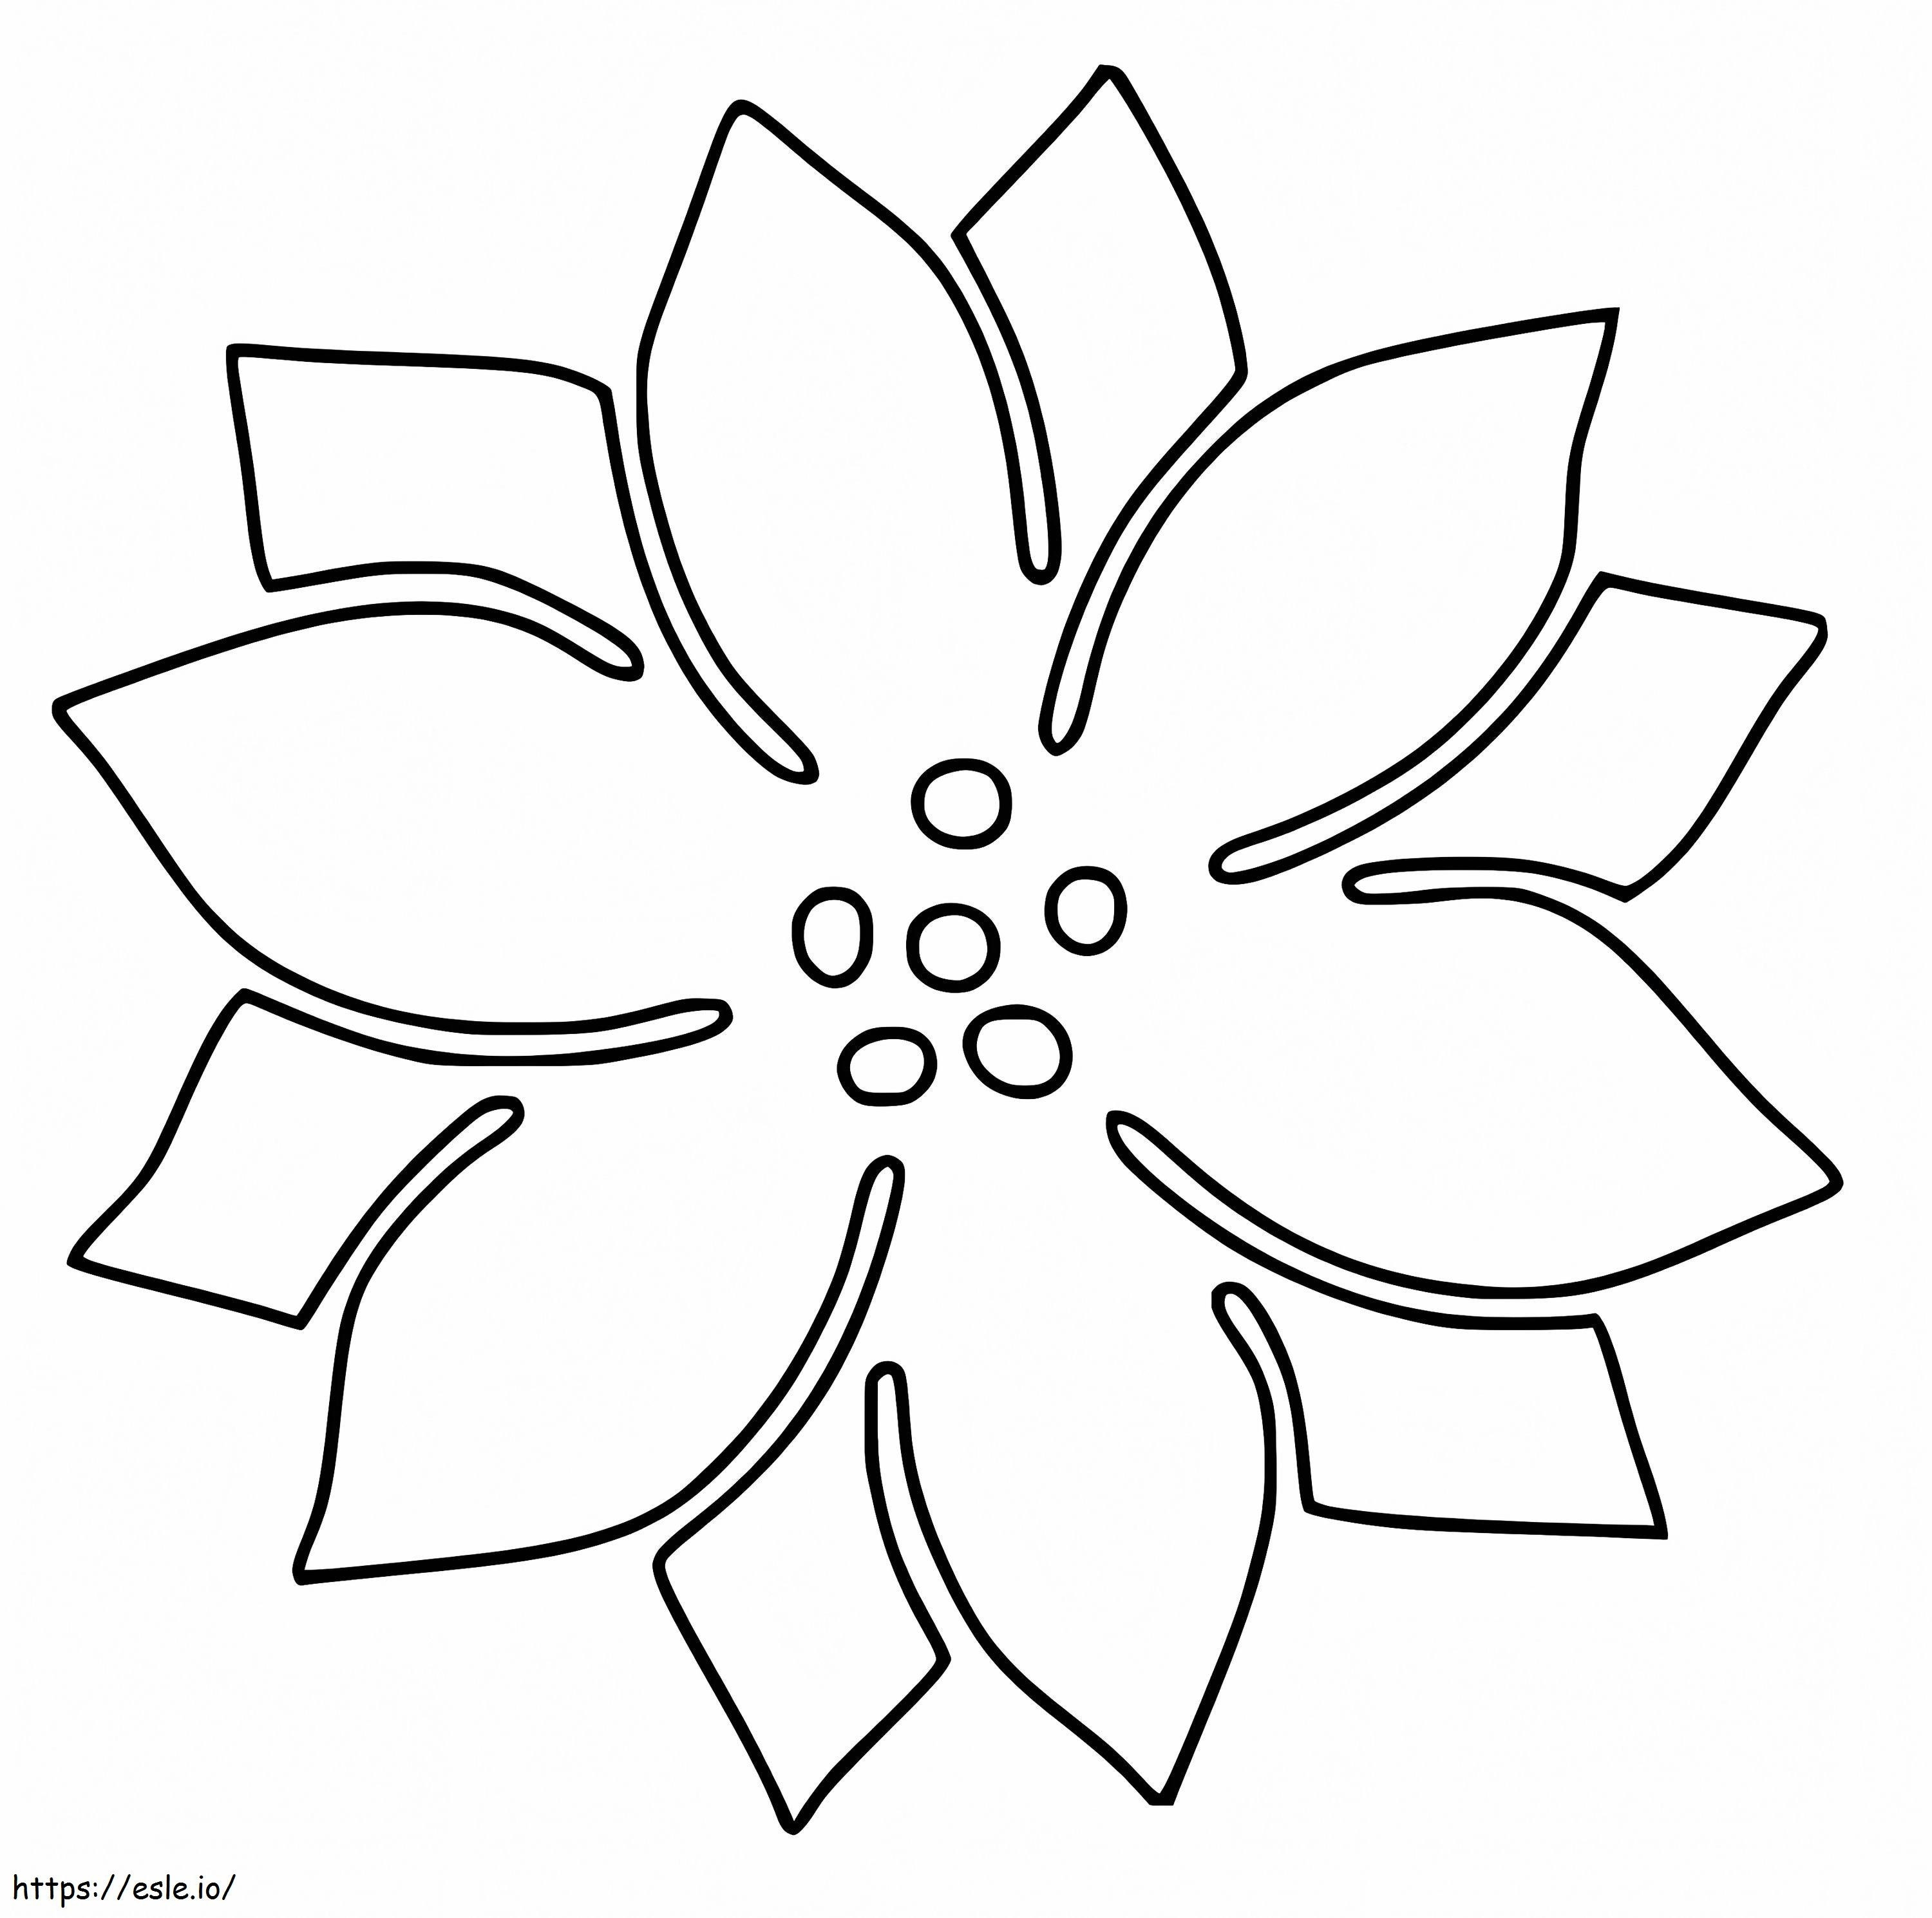 Coloriage Poinsettia simple à imprimer dessin